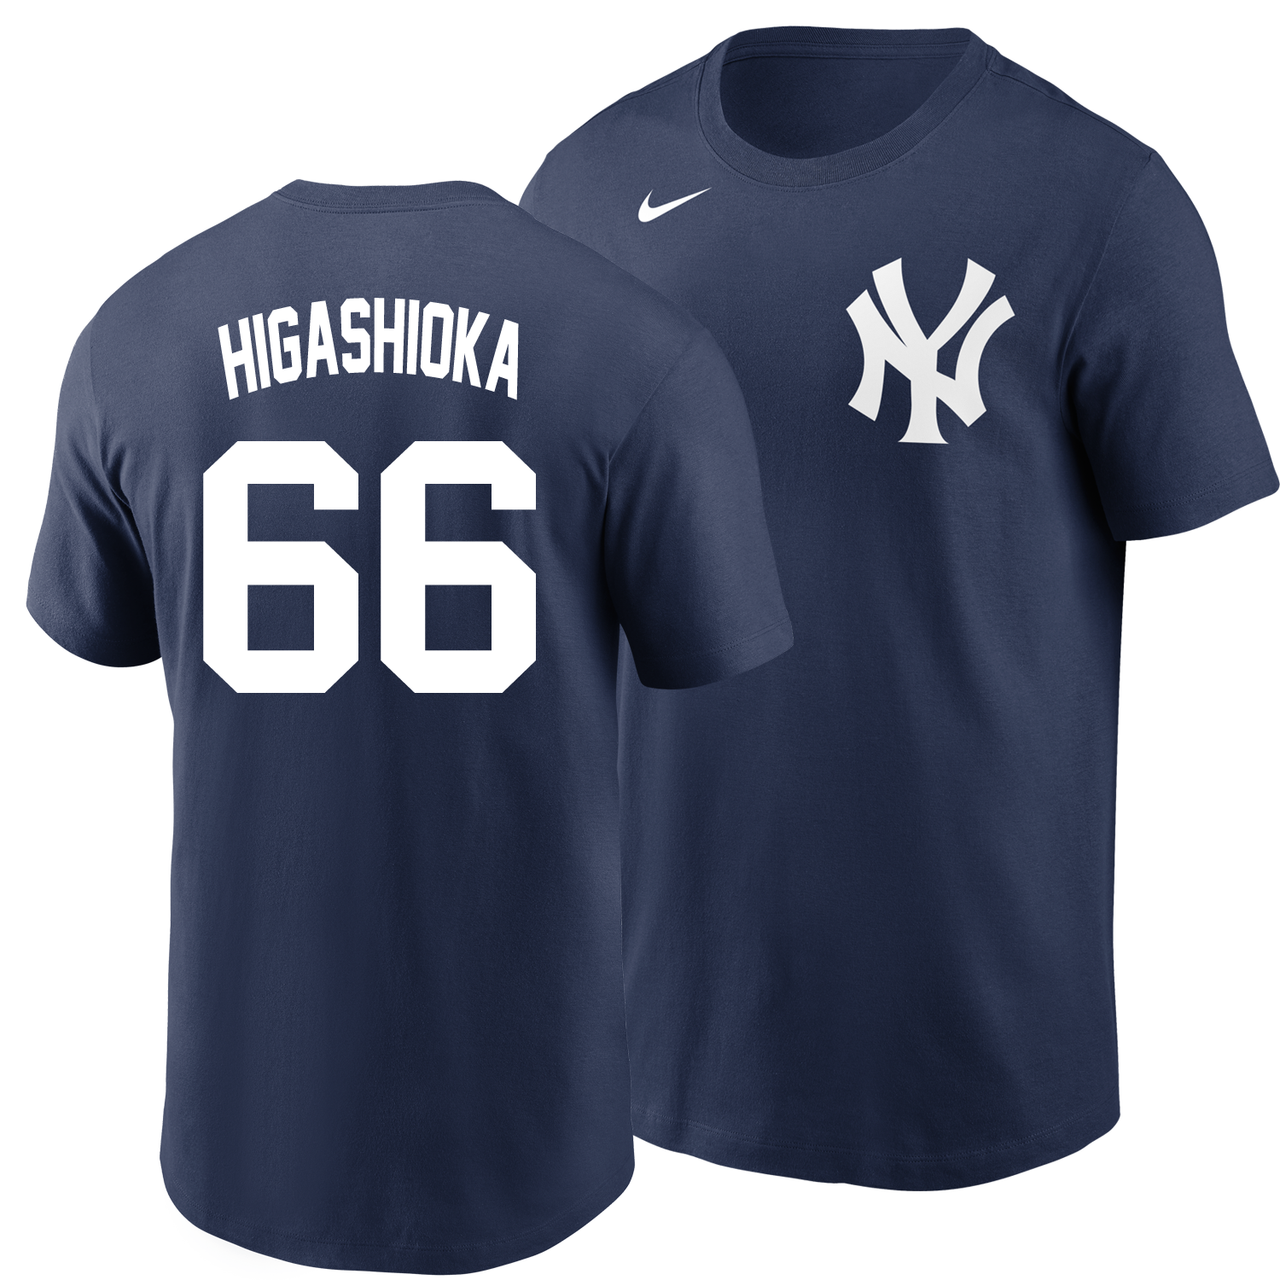 New York Yankees Nike MLB T-Shirt - Medium Grey Cotton